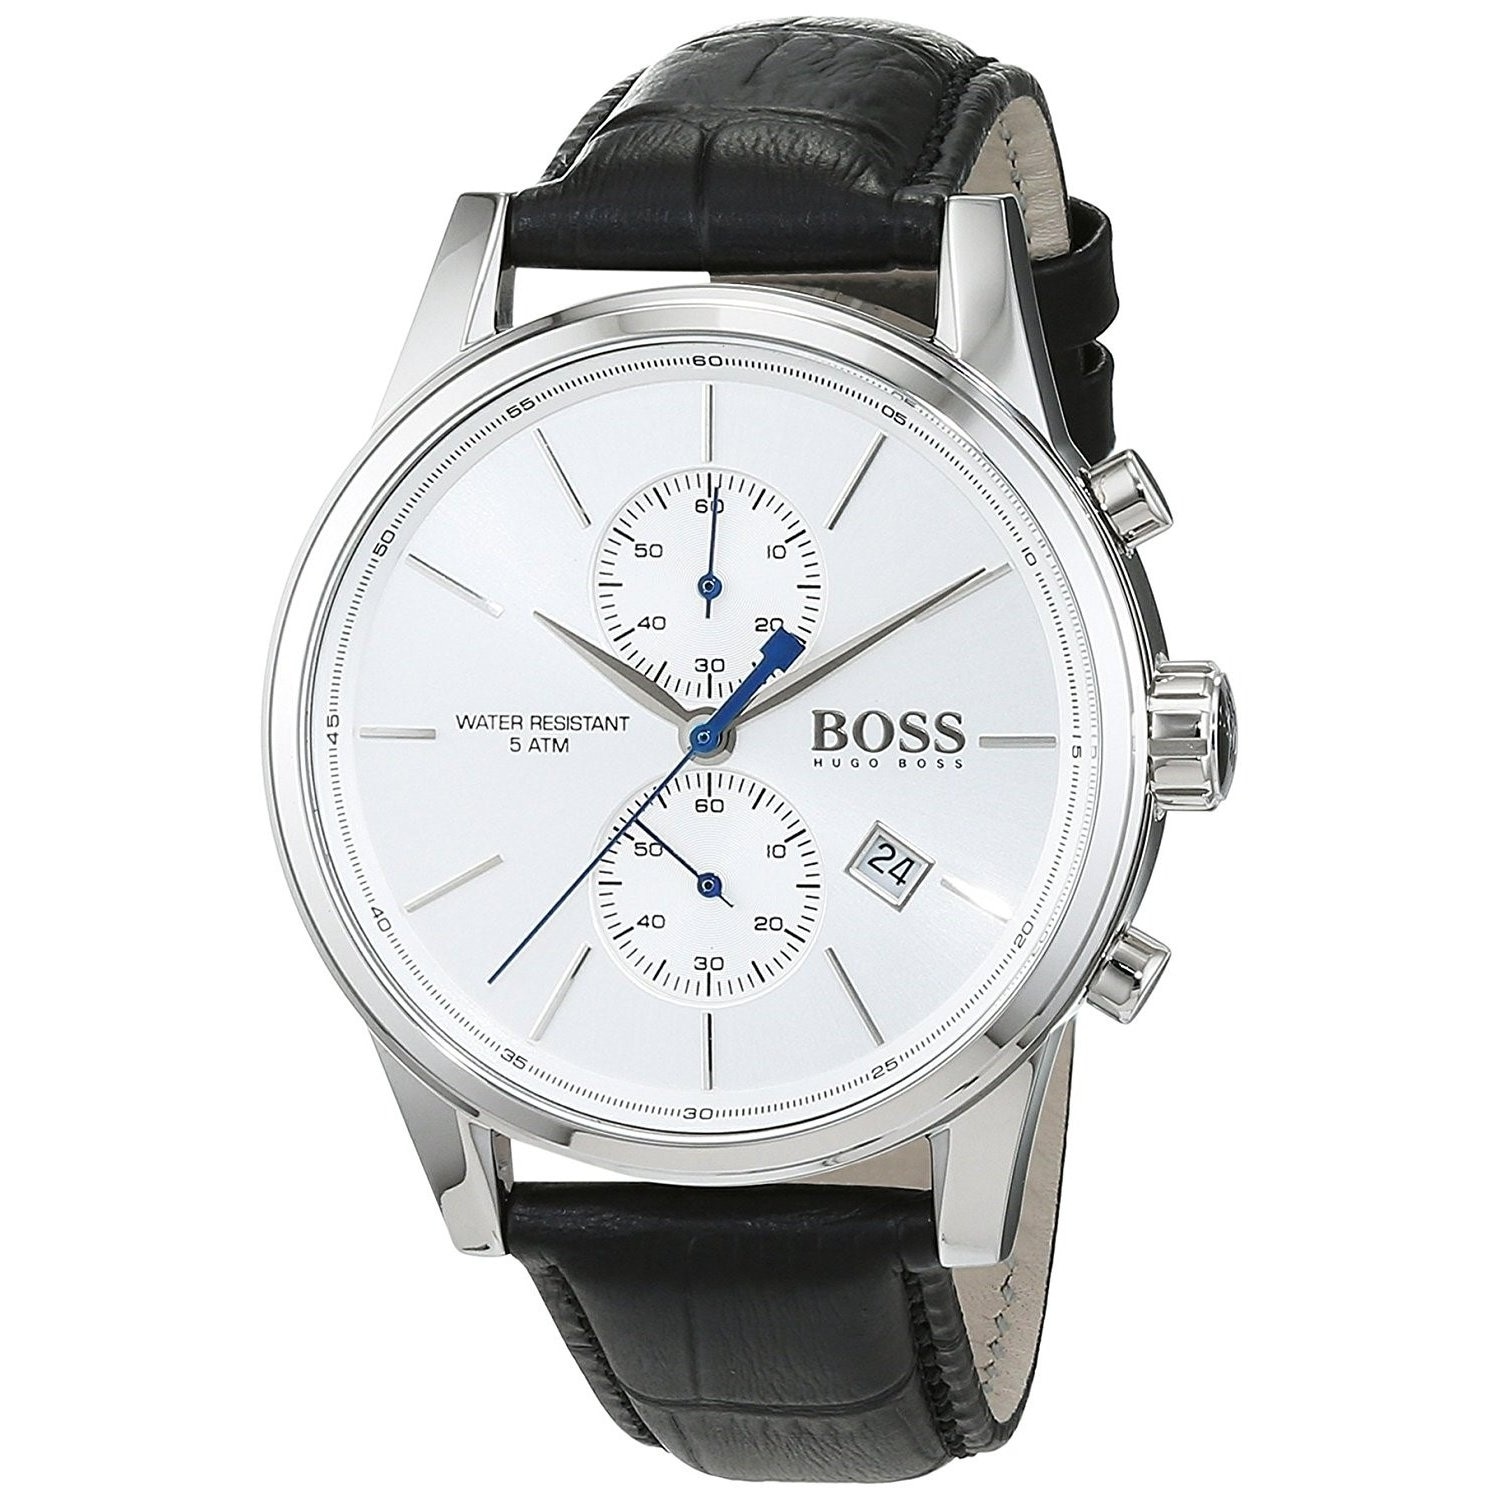 Hugo Boss Men's 1513282 'Jet' Chronograph Black Leather Watch - Silver -  Overstock - 22301937